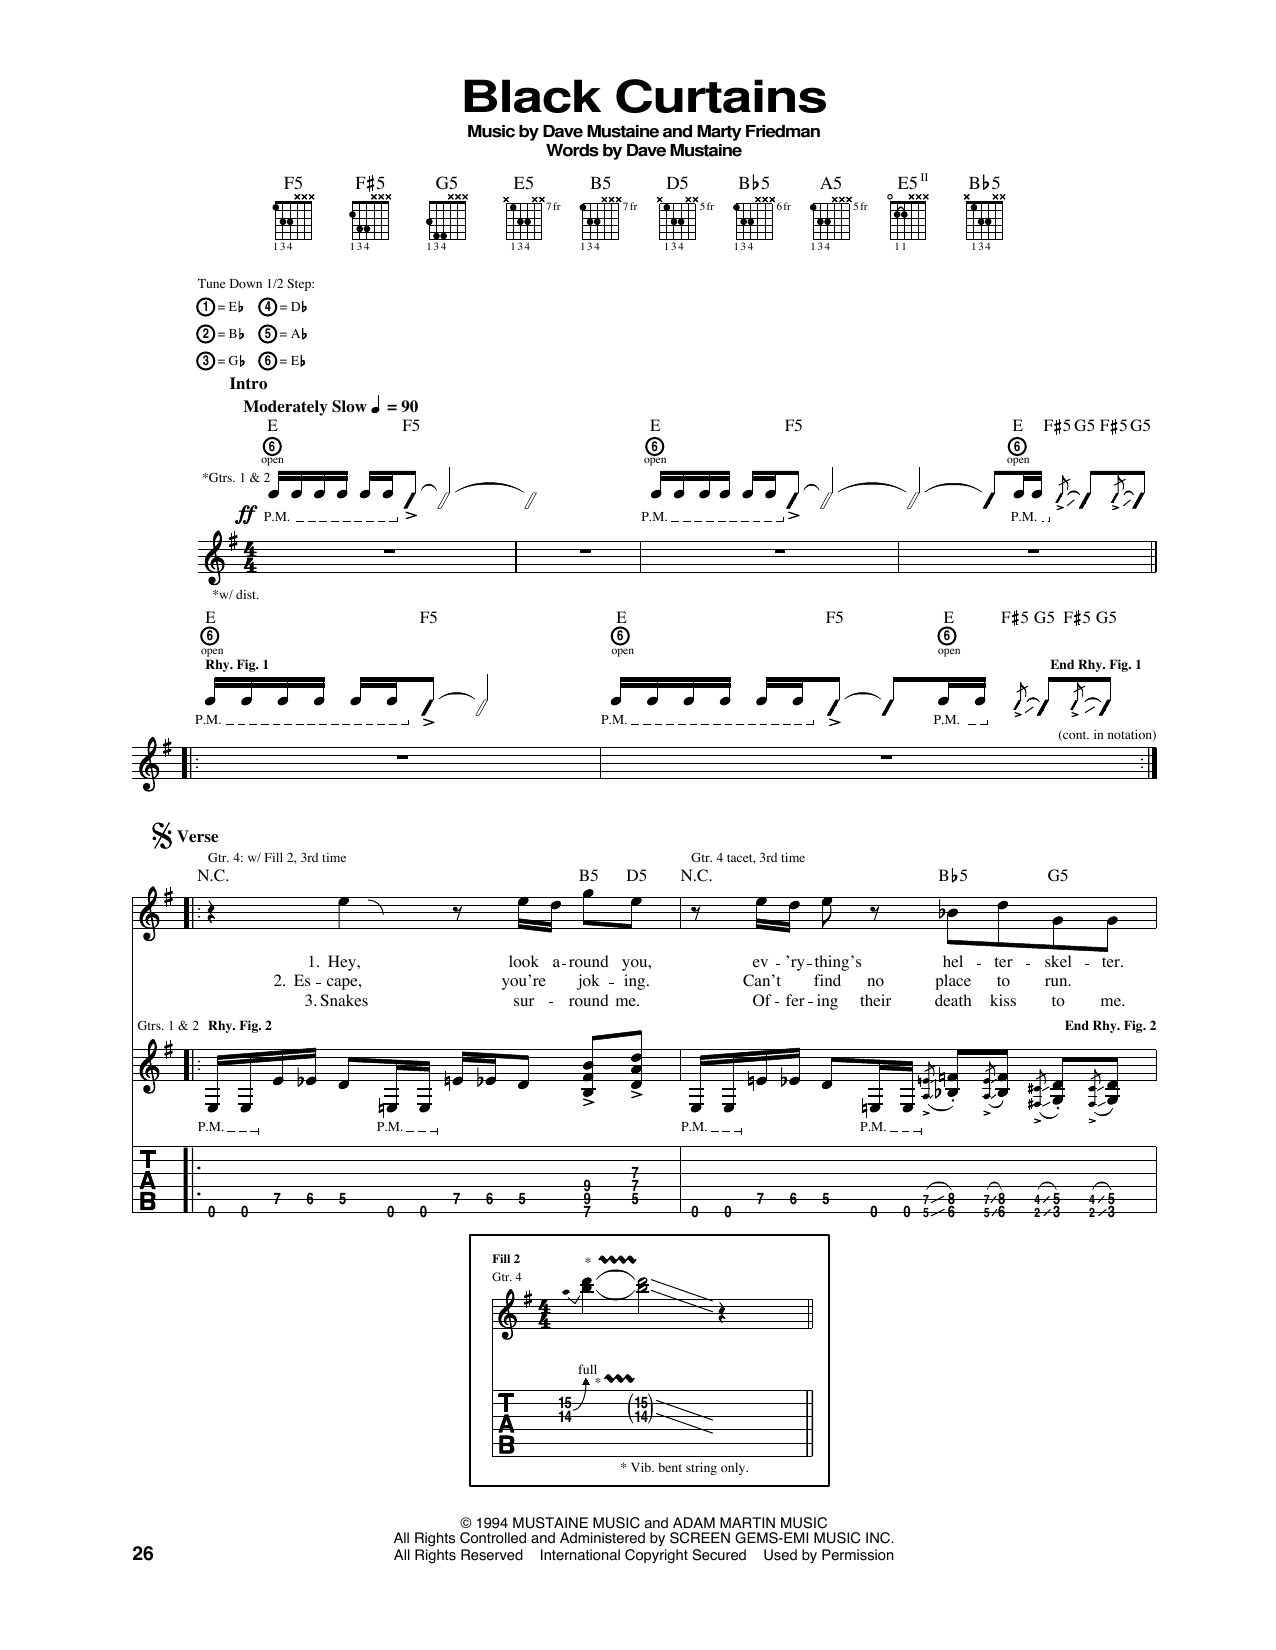 Megadeth Black Curtains Sheet Music Notes & Chords for Guitar Tab - Download or Print PDF